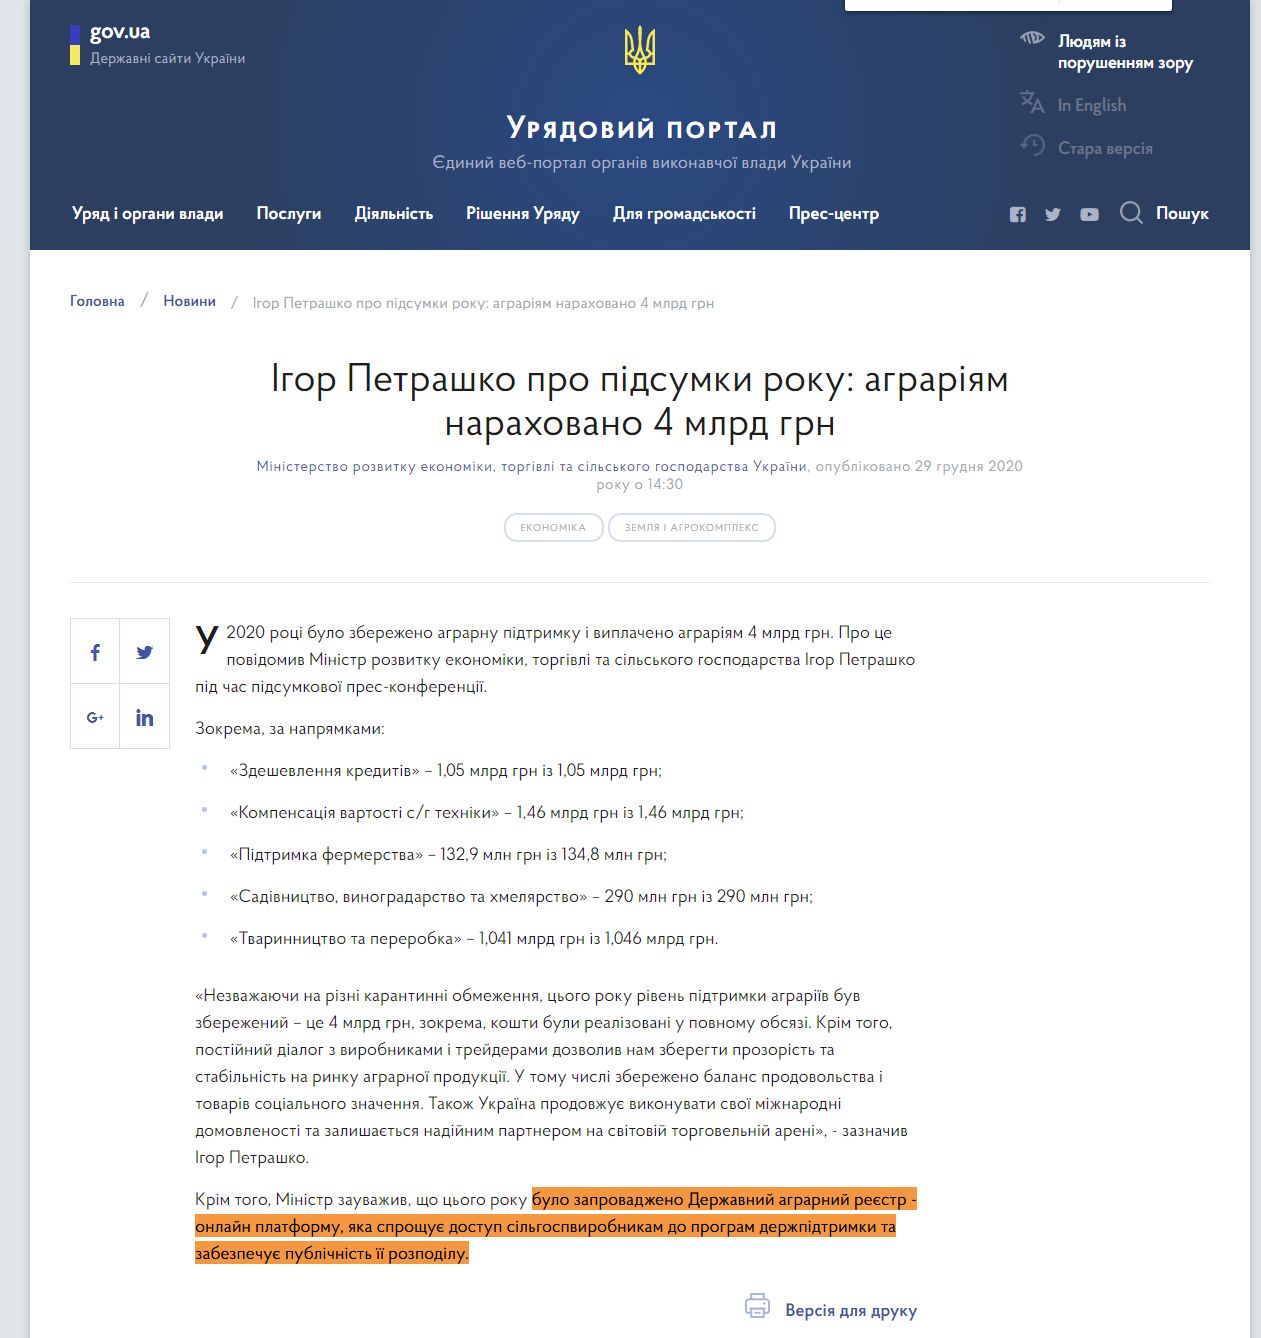 https://www.kmu.gov.ua/news/igor-petrashko-pro-pidsumki-roku-agrariyam-narahovano-4-mlrd-grn